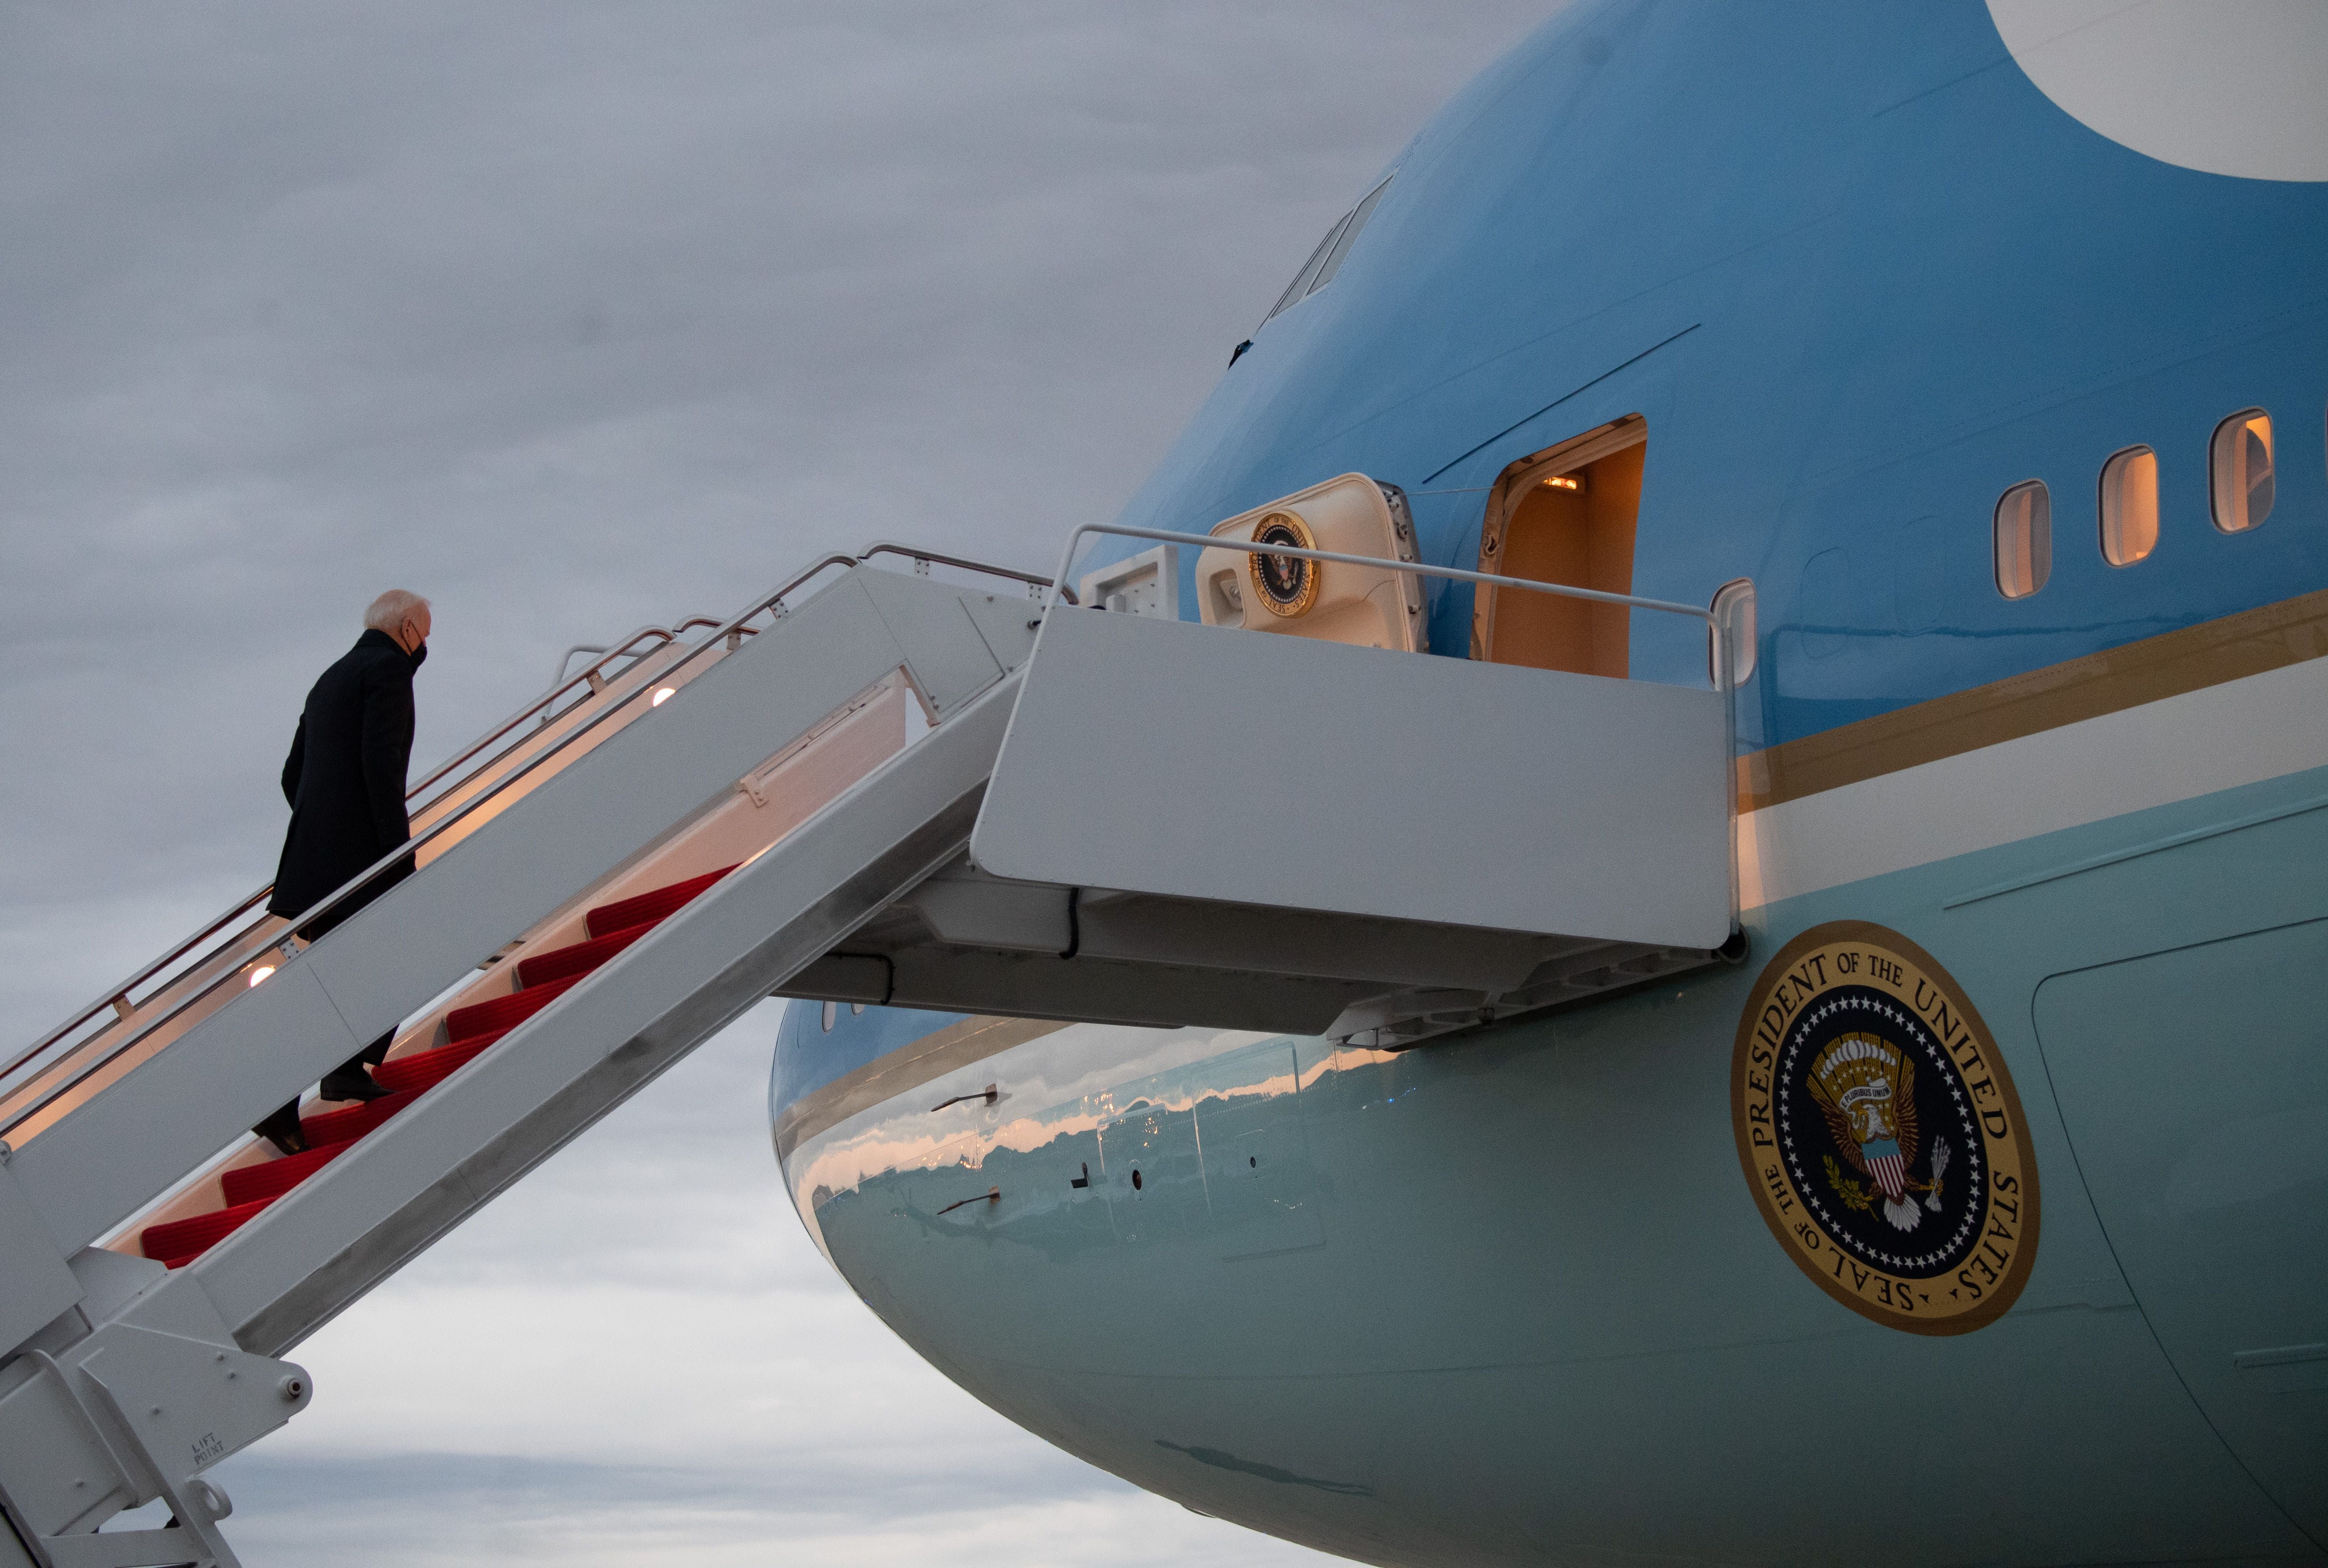 President Joe Biden (not the intruder) boards Air Force One on 16 February